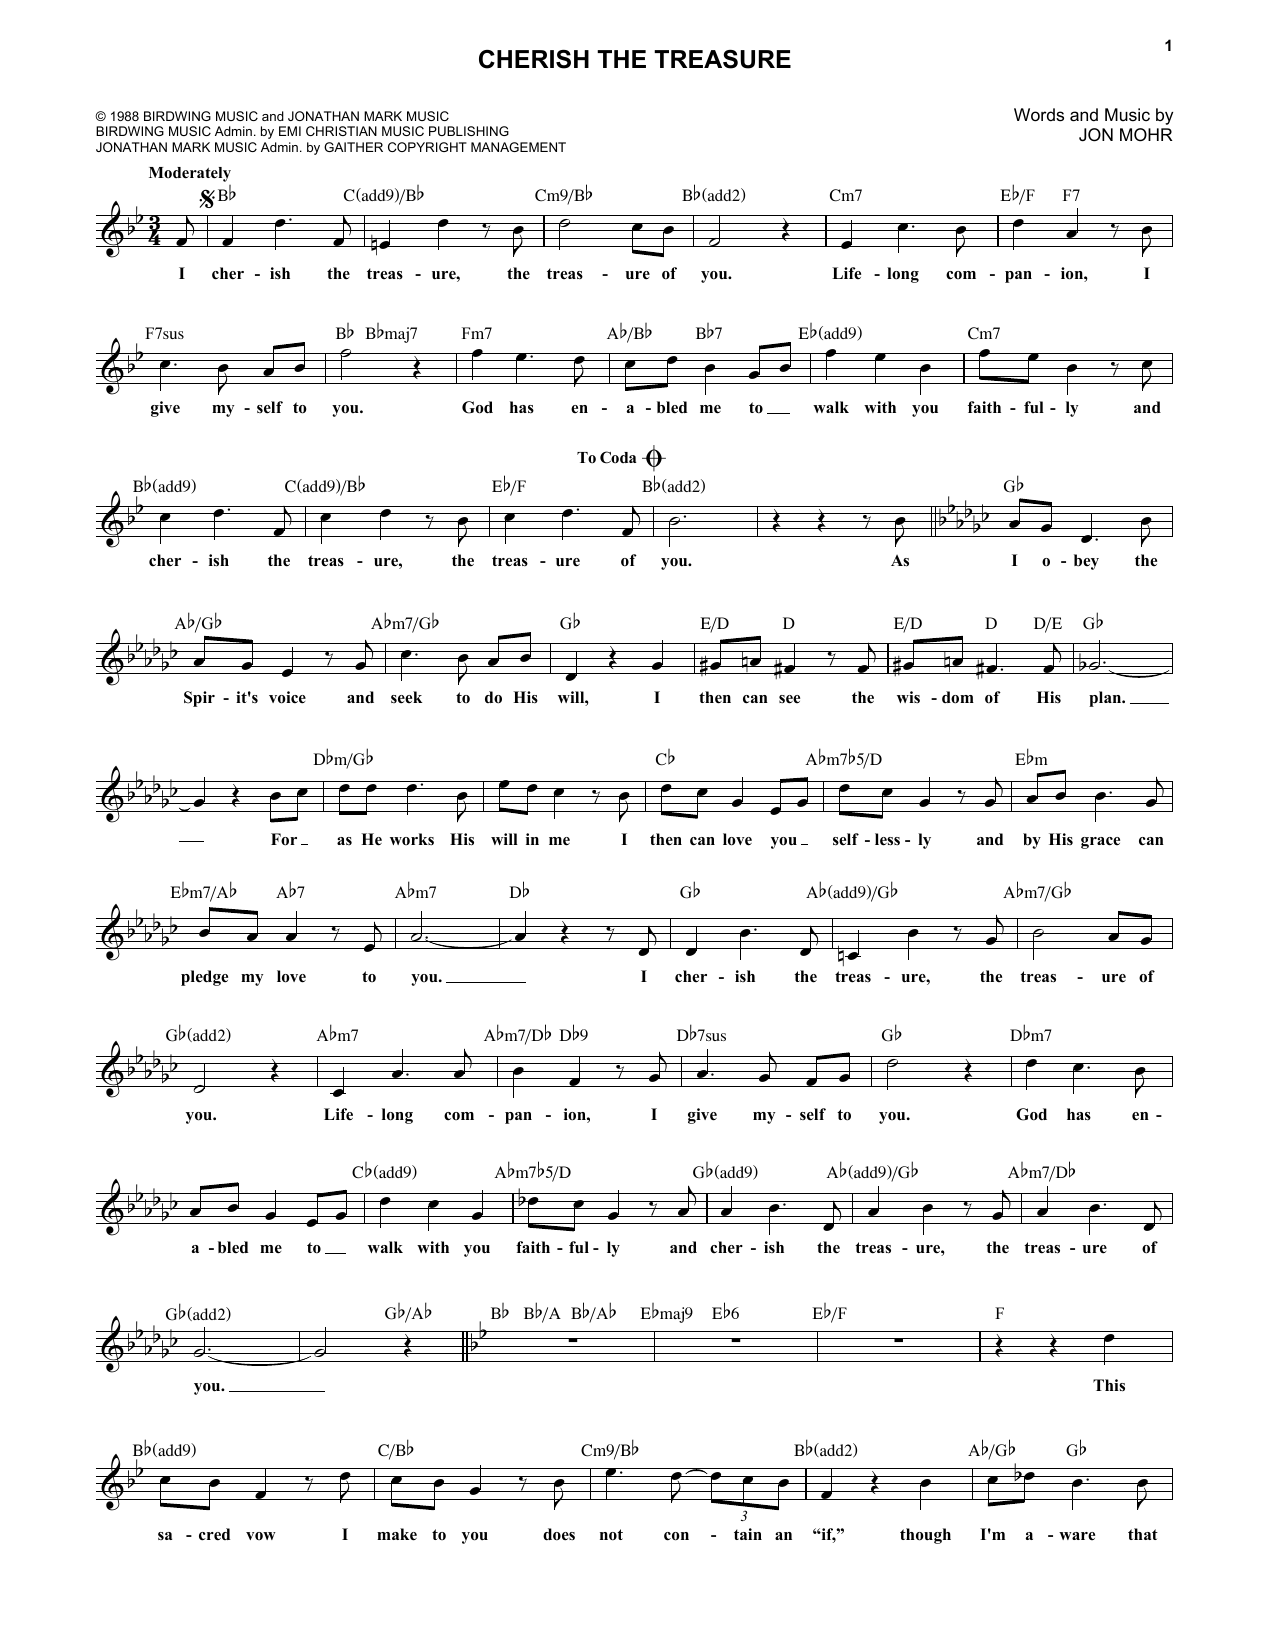 Steve Green Cherish The Treasure Sheet Music Notes & Chords for Melody Line, Lyrics & Chords - Download or Print PDF